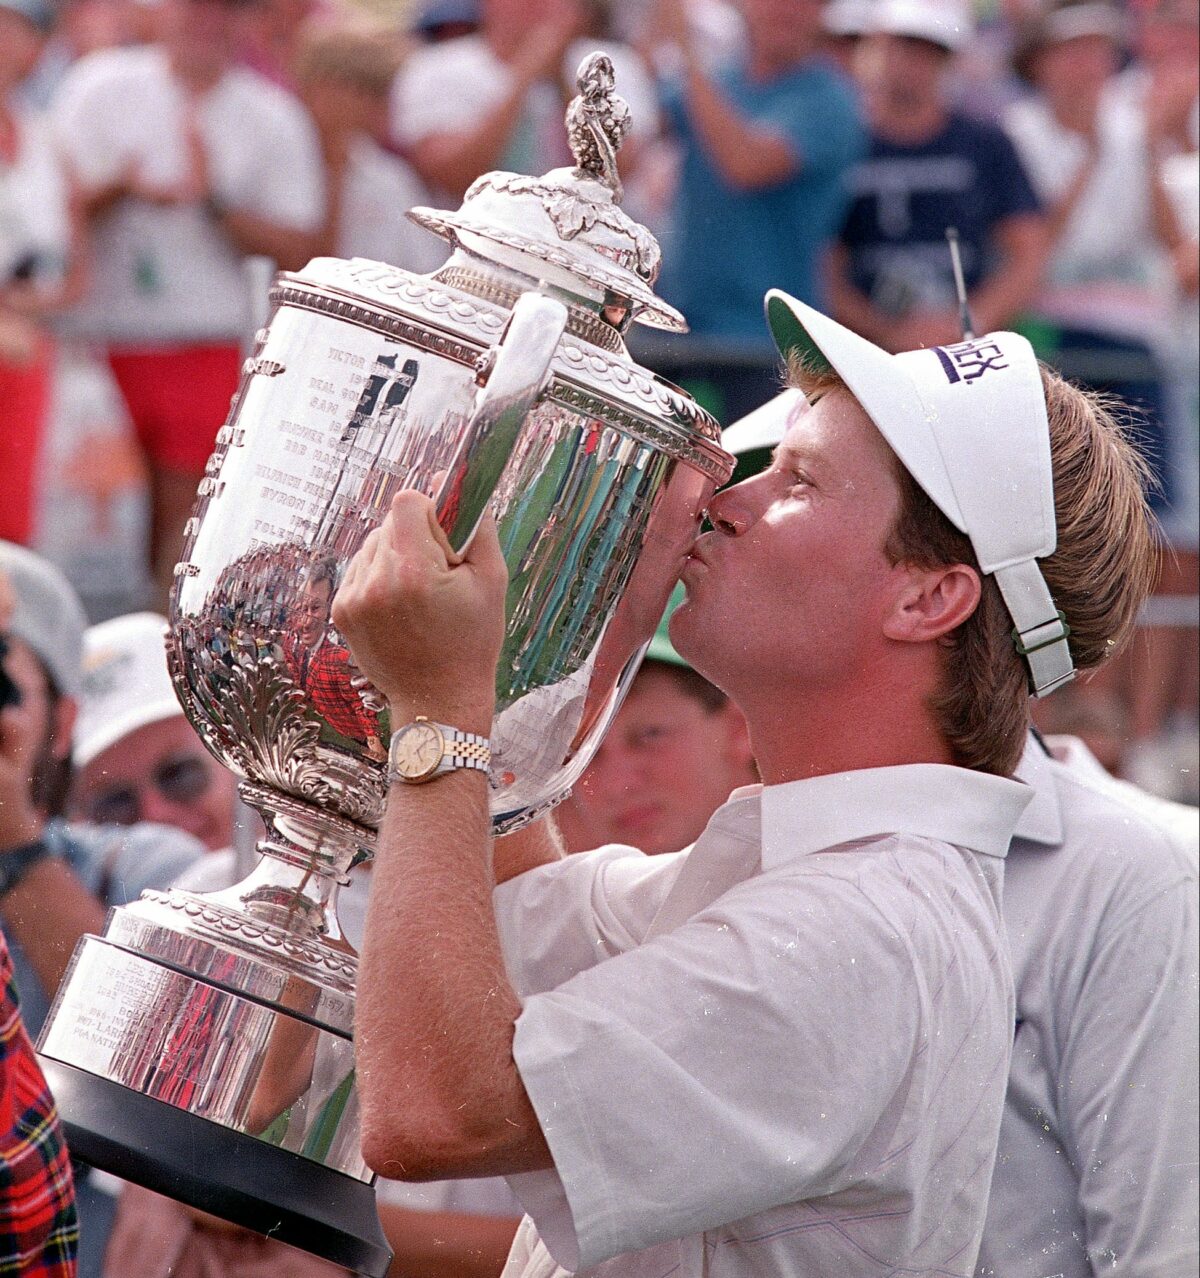 Oak Hill member Jeff Sluman enjoyed the highlight of his career at the 1988 PGA Championship